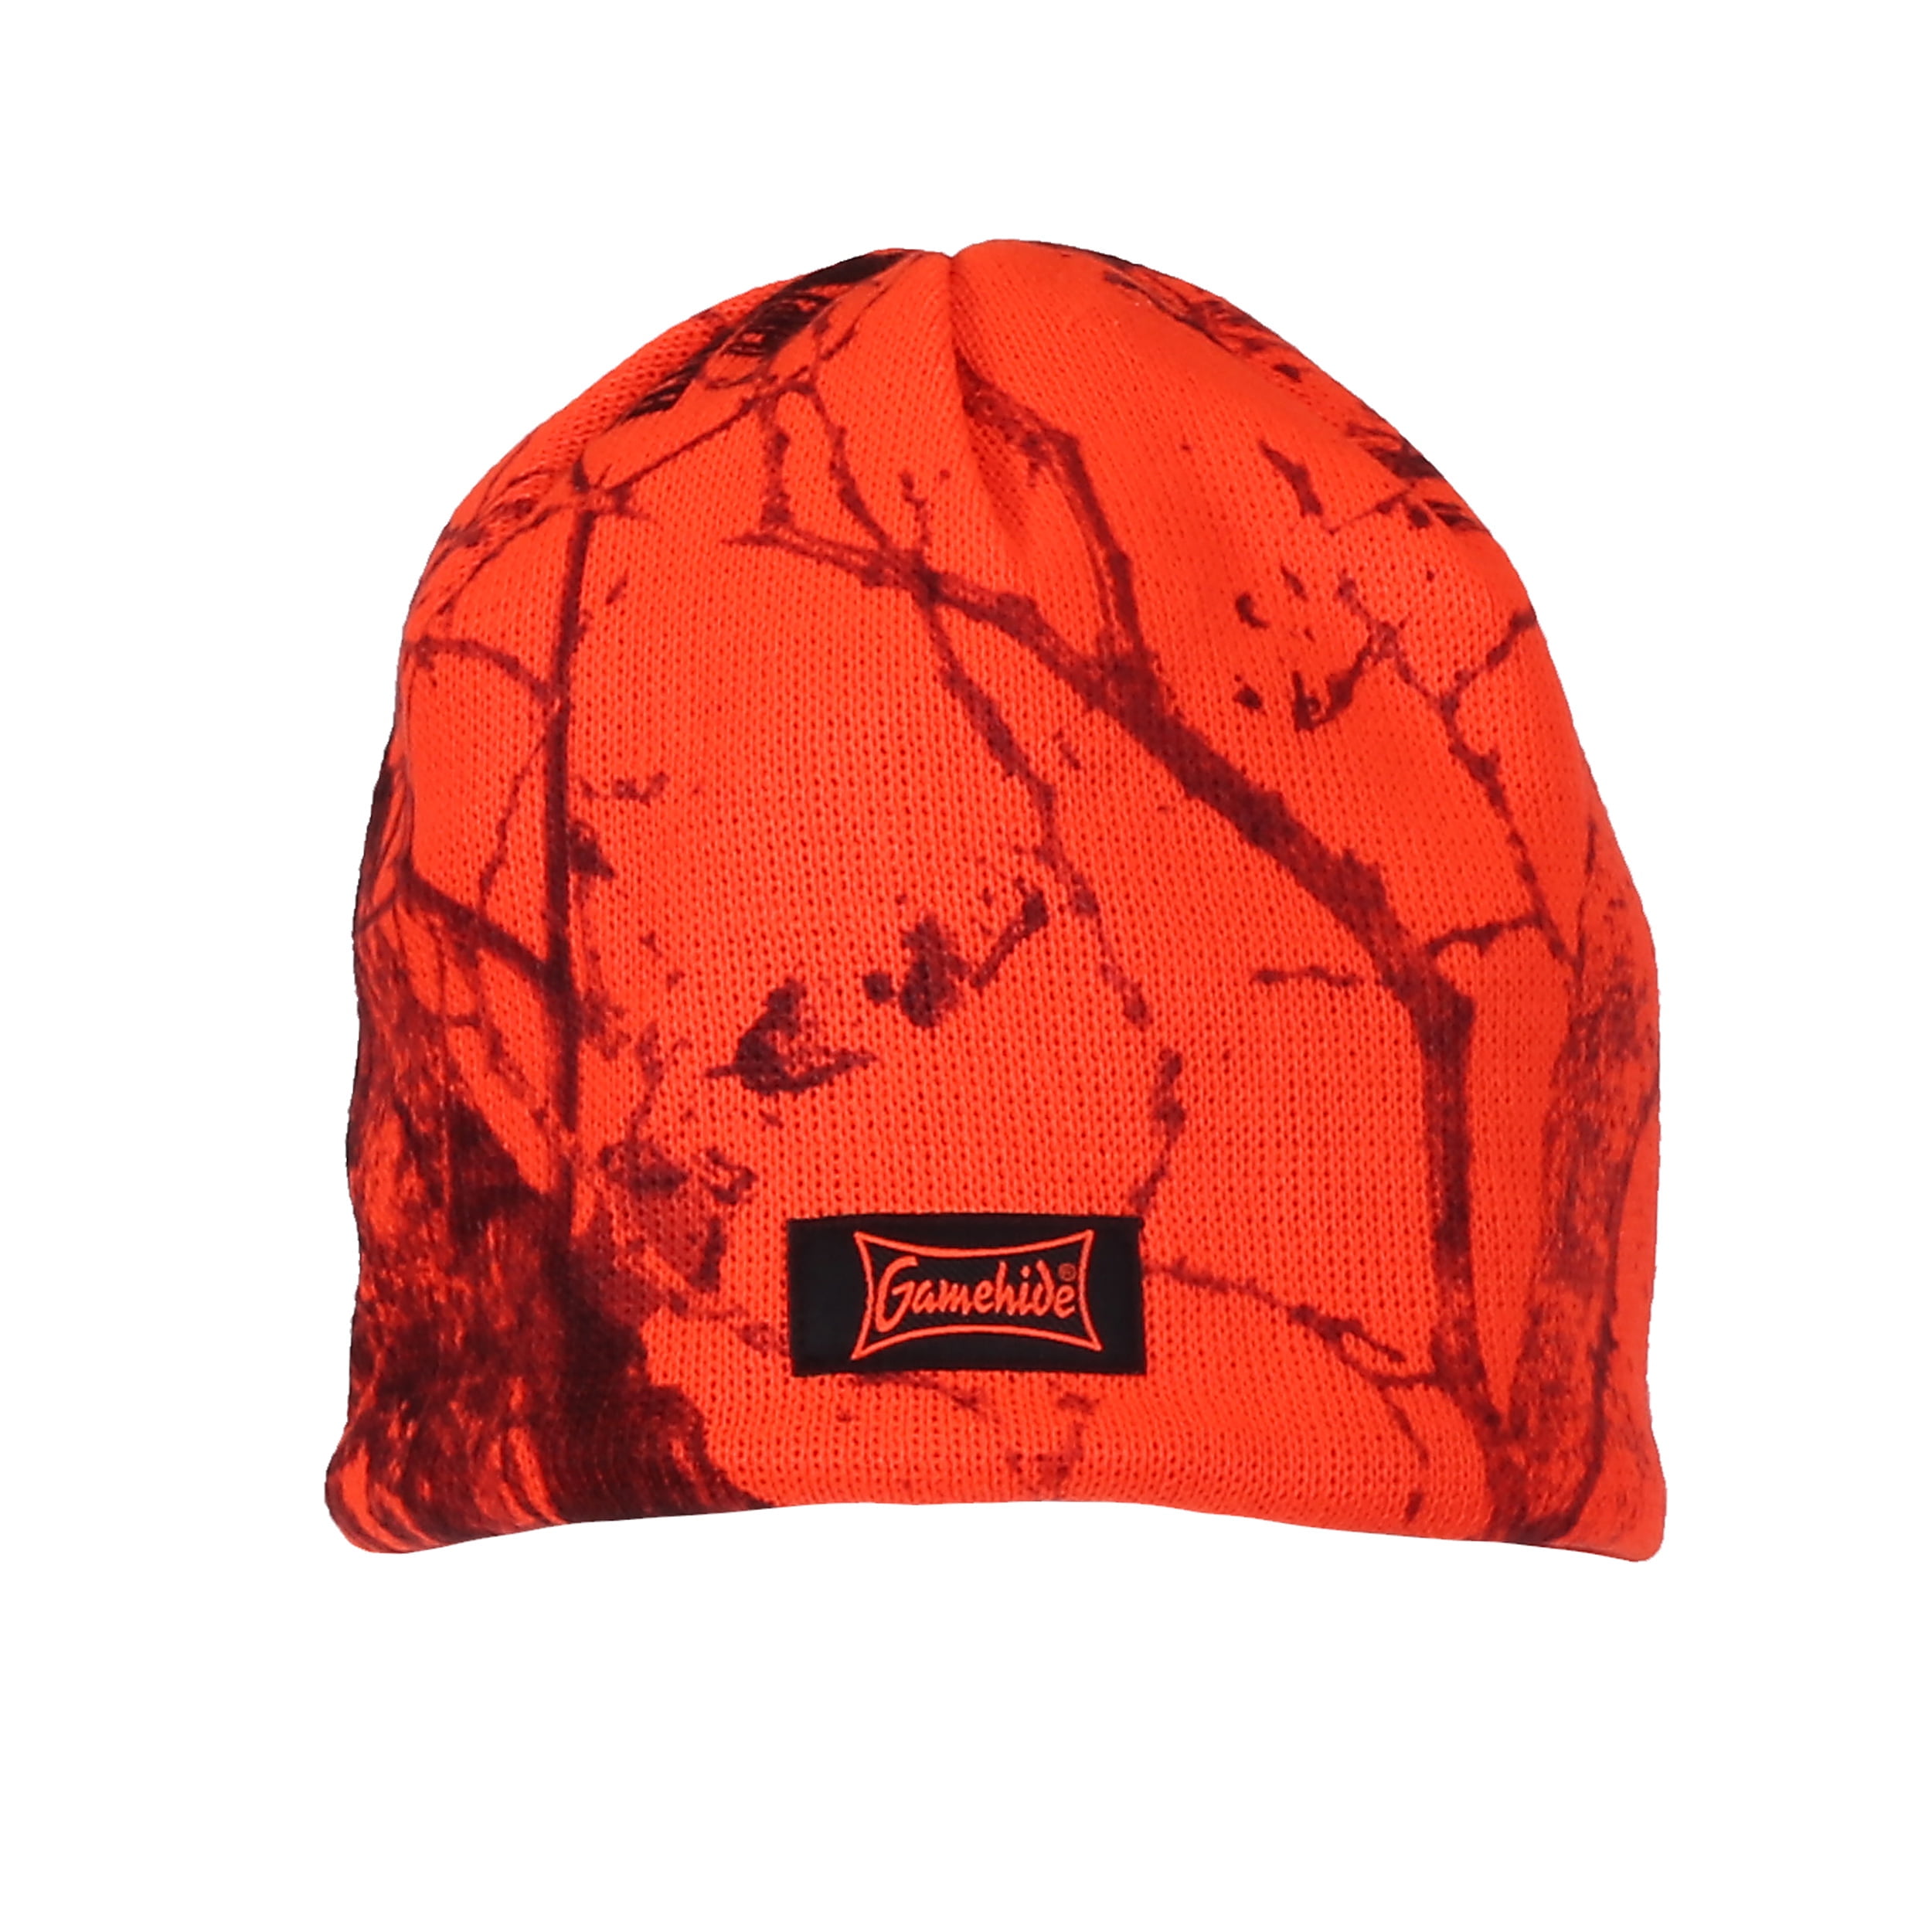 Gamehide Hat Skull Cap Fleece Lined Insulated Blaze Orange Camo Os